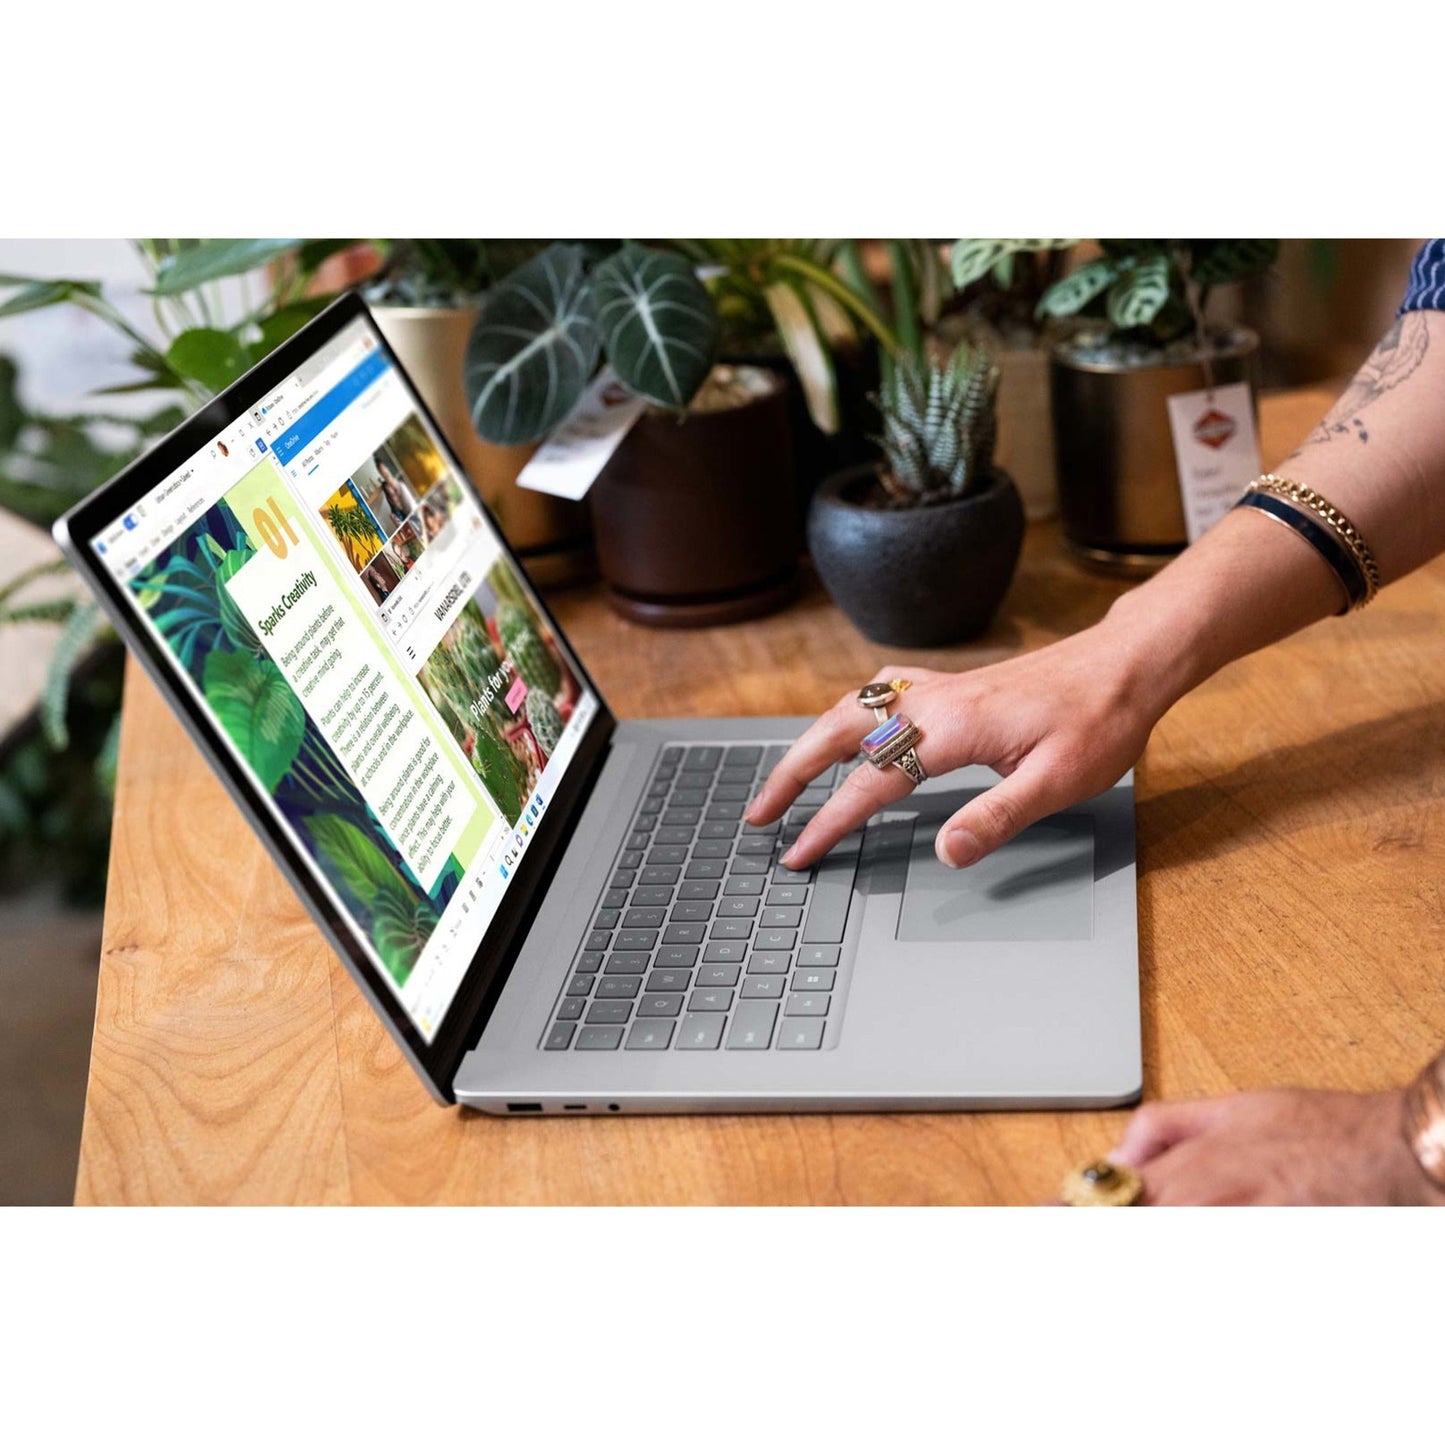 Microsoft Surface Laptop 5 15" Touchscreen Notebook - 2496 x 1664 - Intel Core i7 12th Gen i7-1265U - Intel Evo Platform - 16 GB Total RAM - 256 GB SSD - Platinum - TAA Compliant